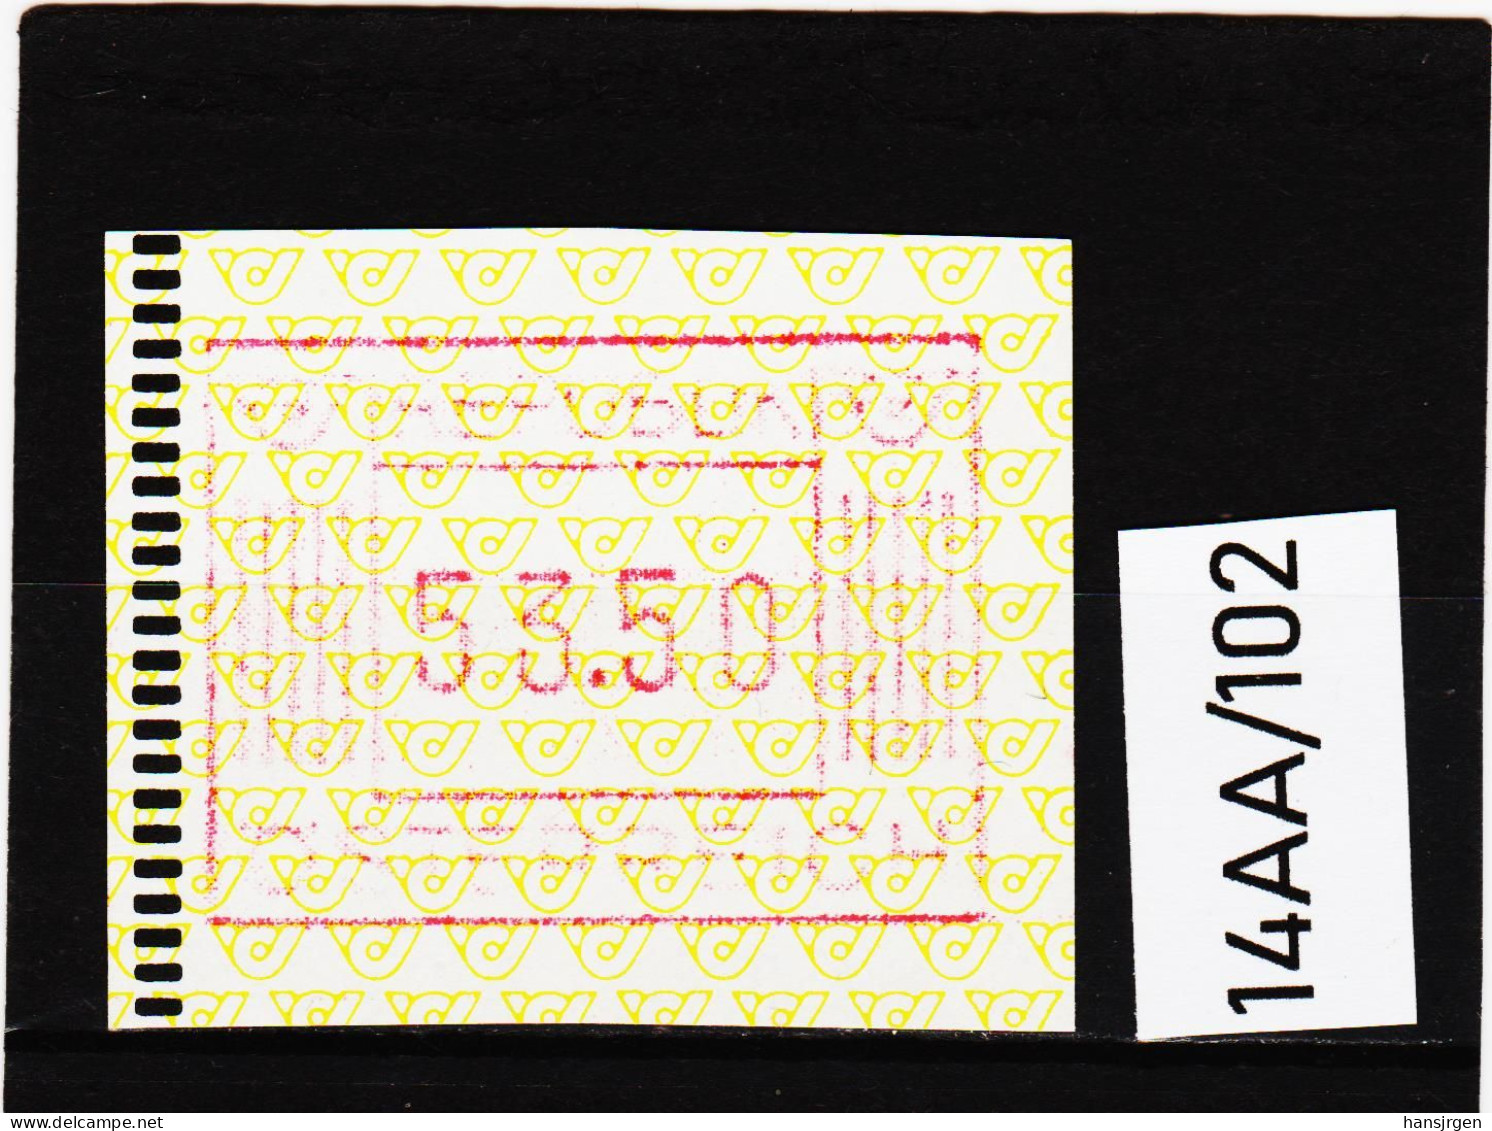 14AA/102  ÖSTERREICH 1983 AUTOMATENMARKEN 1. AUSGABE  53,50 SCHILLING   ** Postfrisch - Timbres De Distributeurs [ATM]